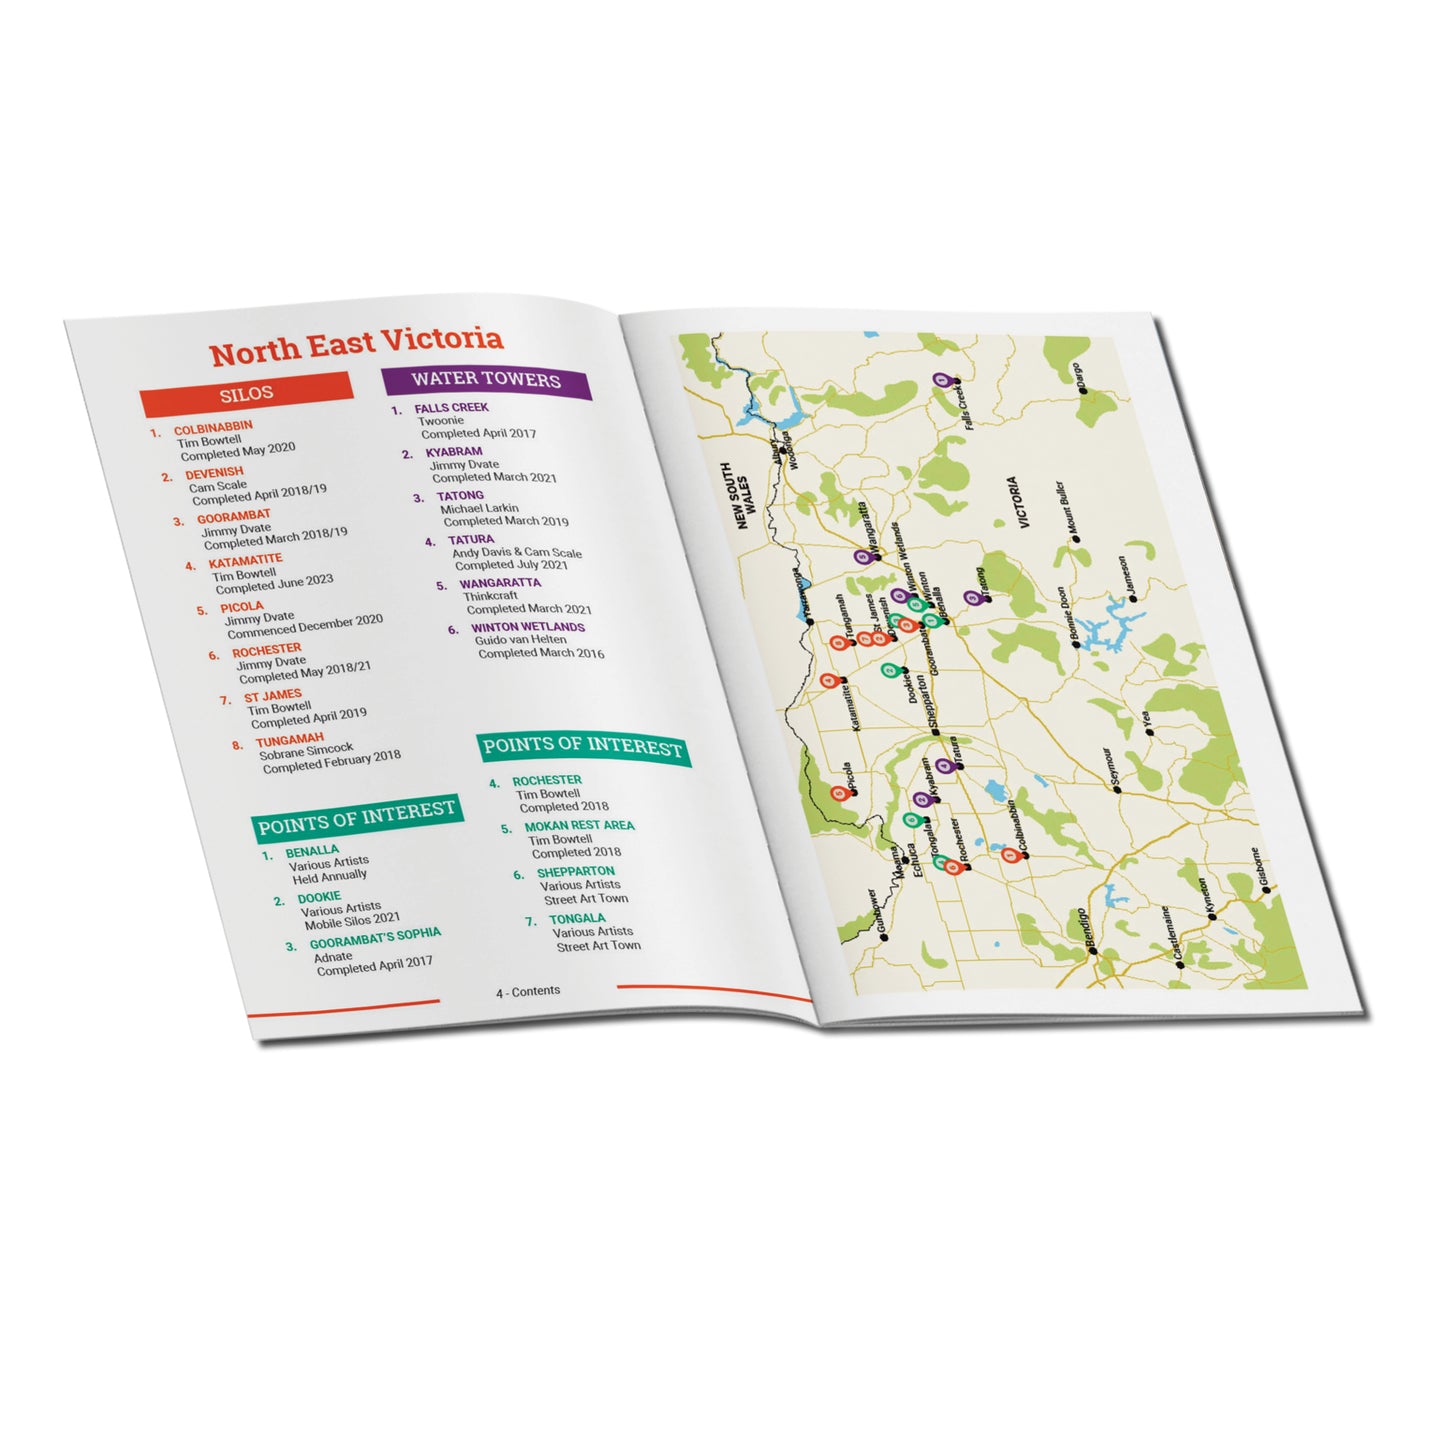 Victoria - North East Region Guide